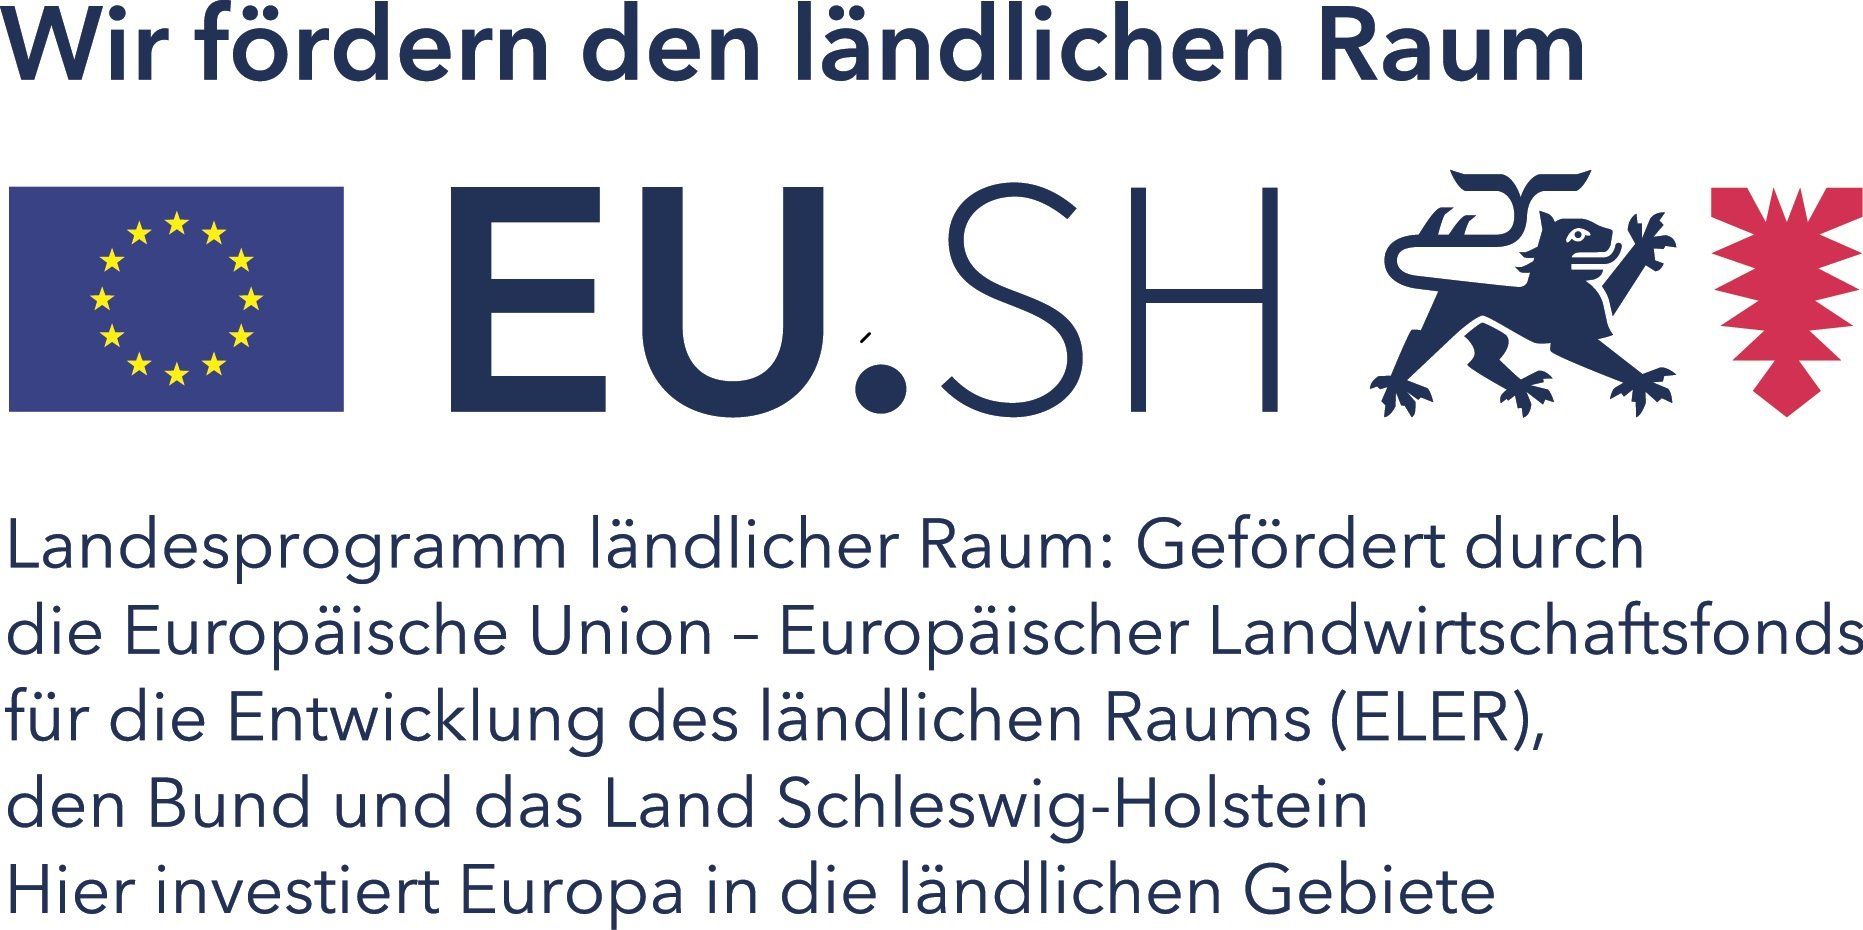 www.eler.schleswig-holstein.de | http://ec.europa.eu/agriculture/rural-development-2014-2020/index_de.htm